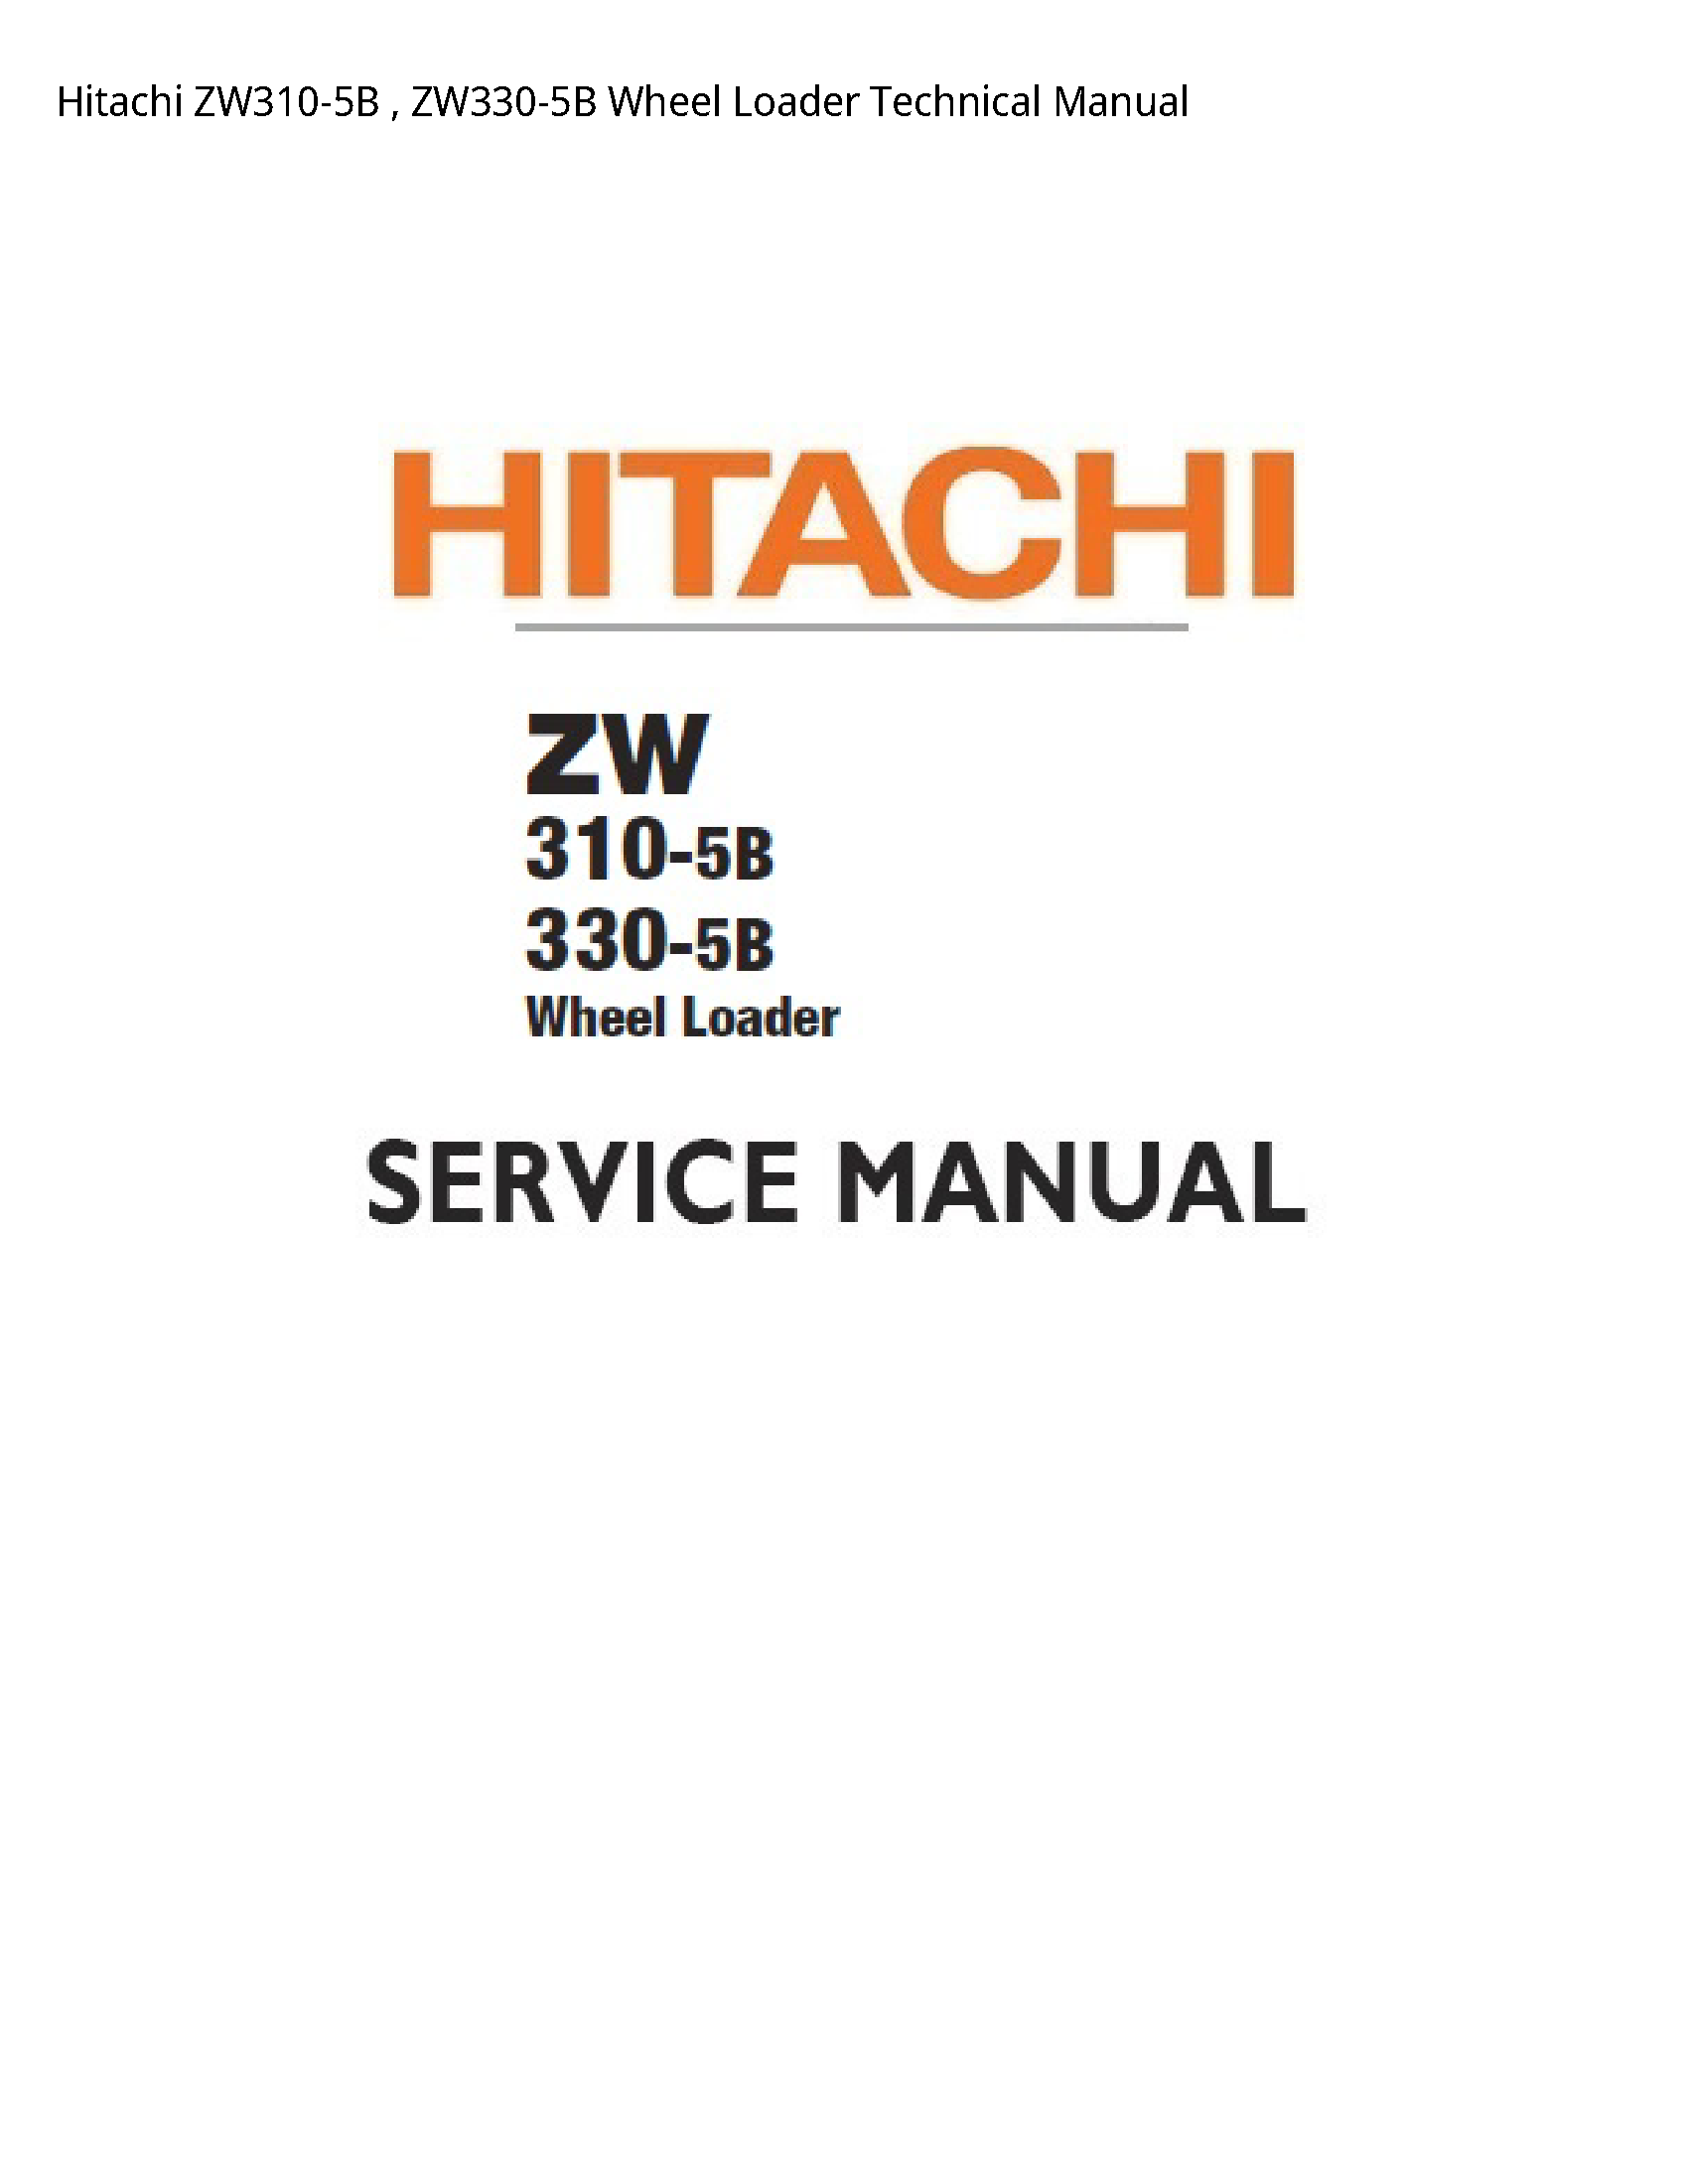 Hitachi ZW310-5B Wheel Loader Technical manual